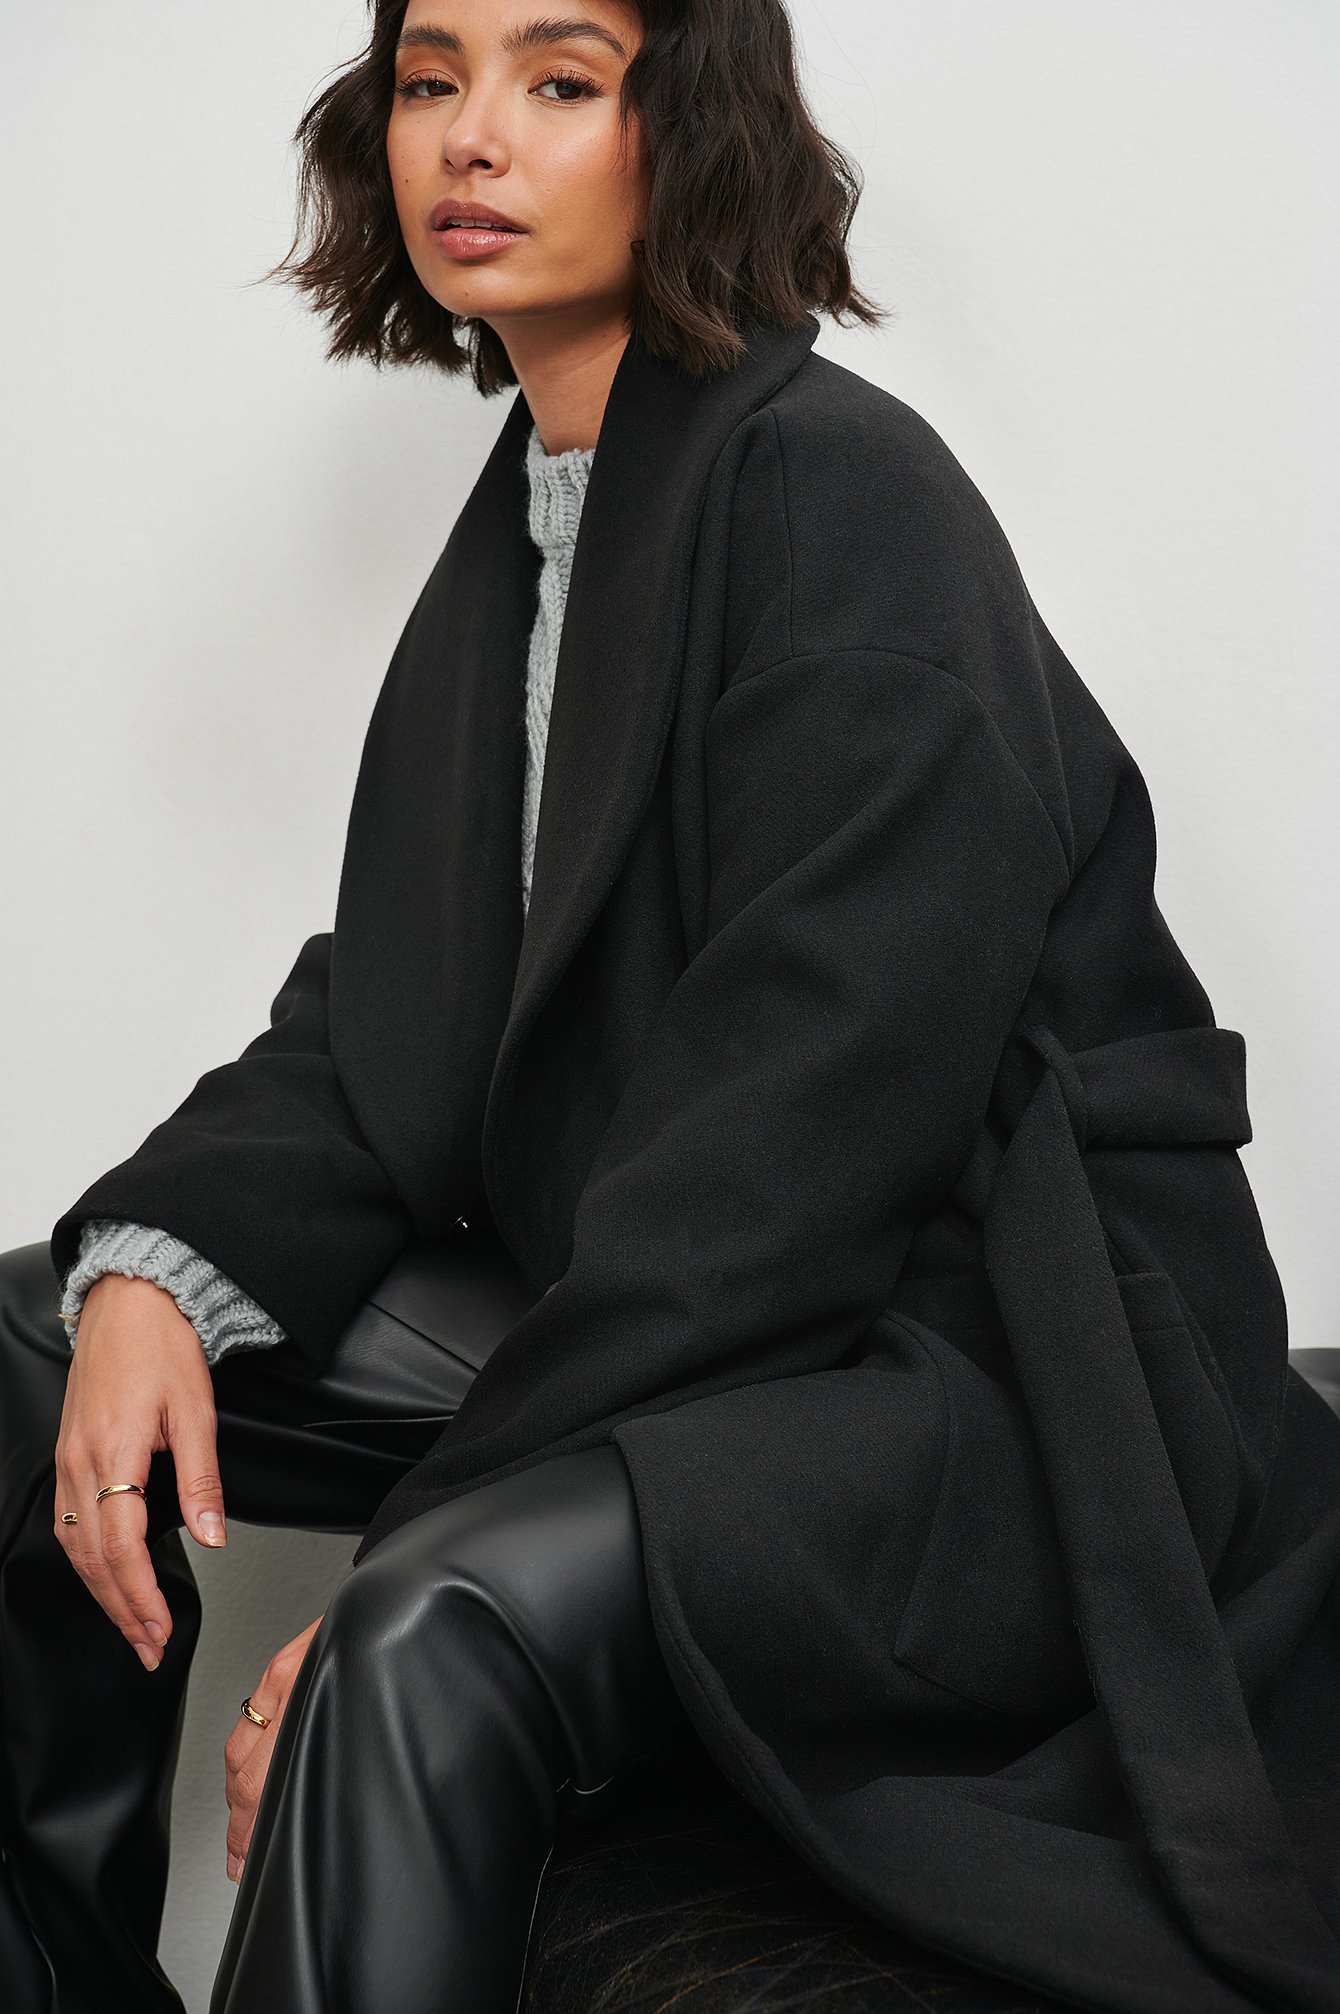 NA-KD Sofia Coelho x Kunstpelzmantel mit Gürtel in Natur Damen Bekleidung Mäntel 